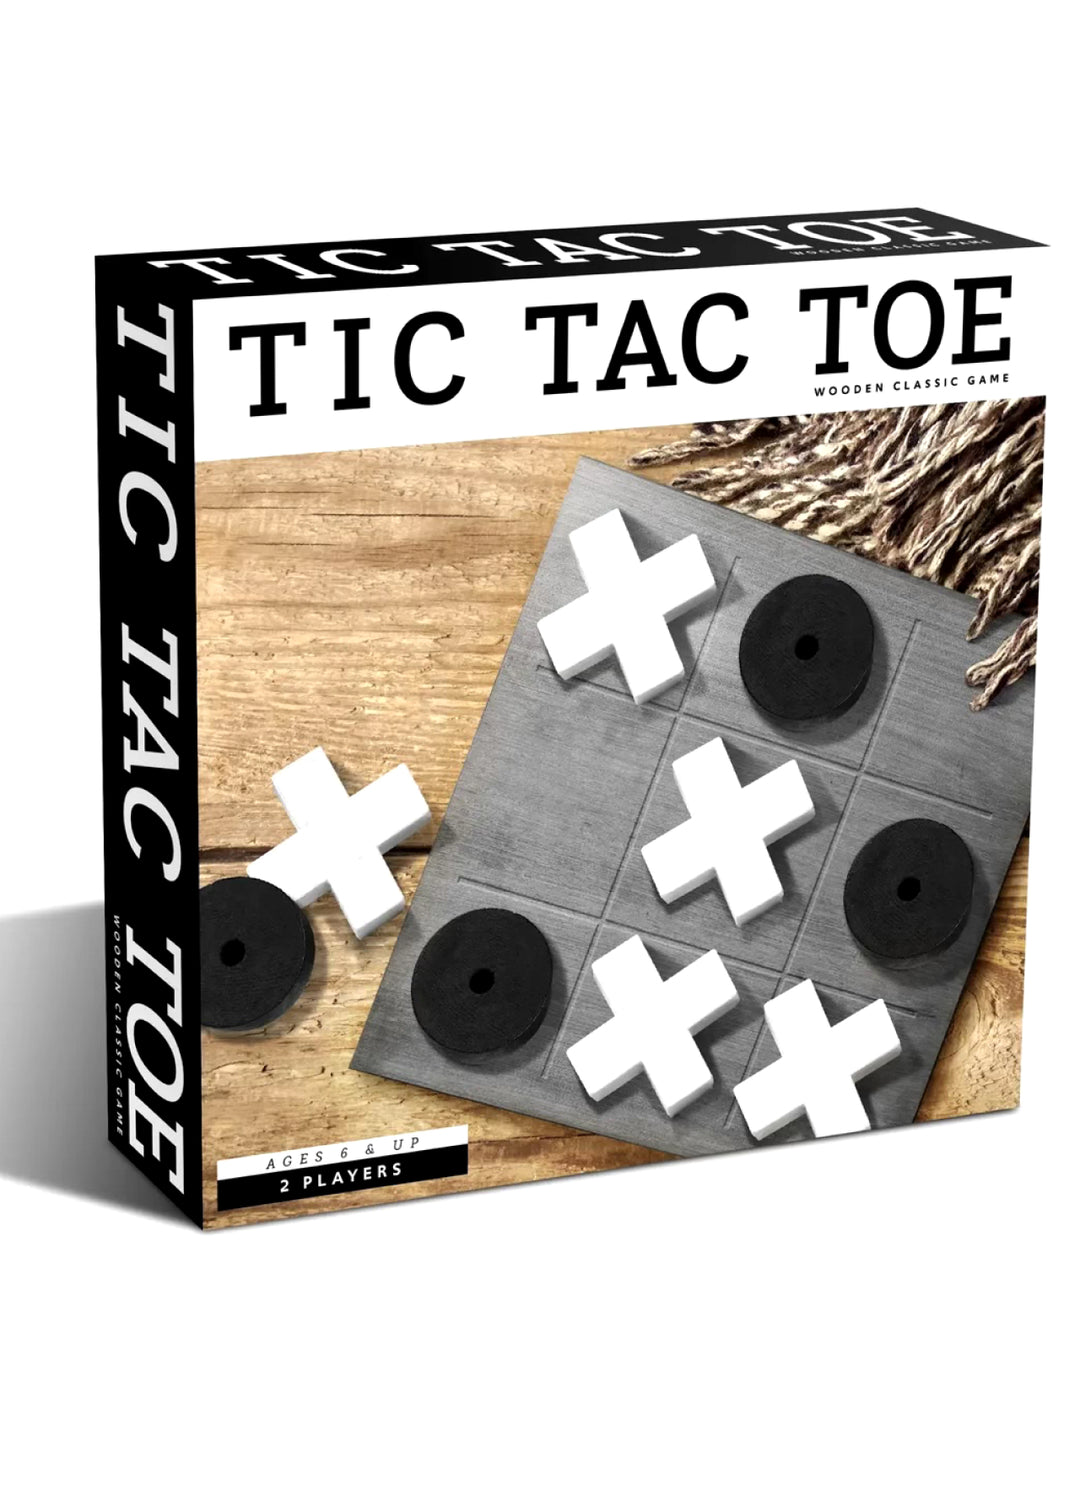 Tic Tac Toe Wooden Game Set